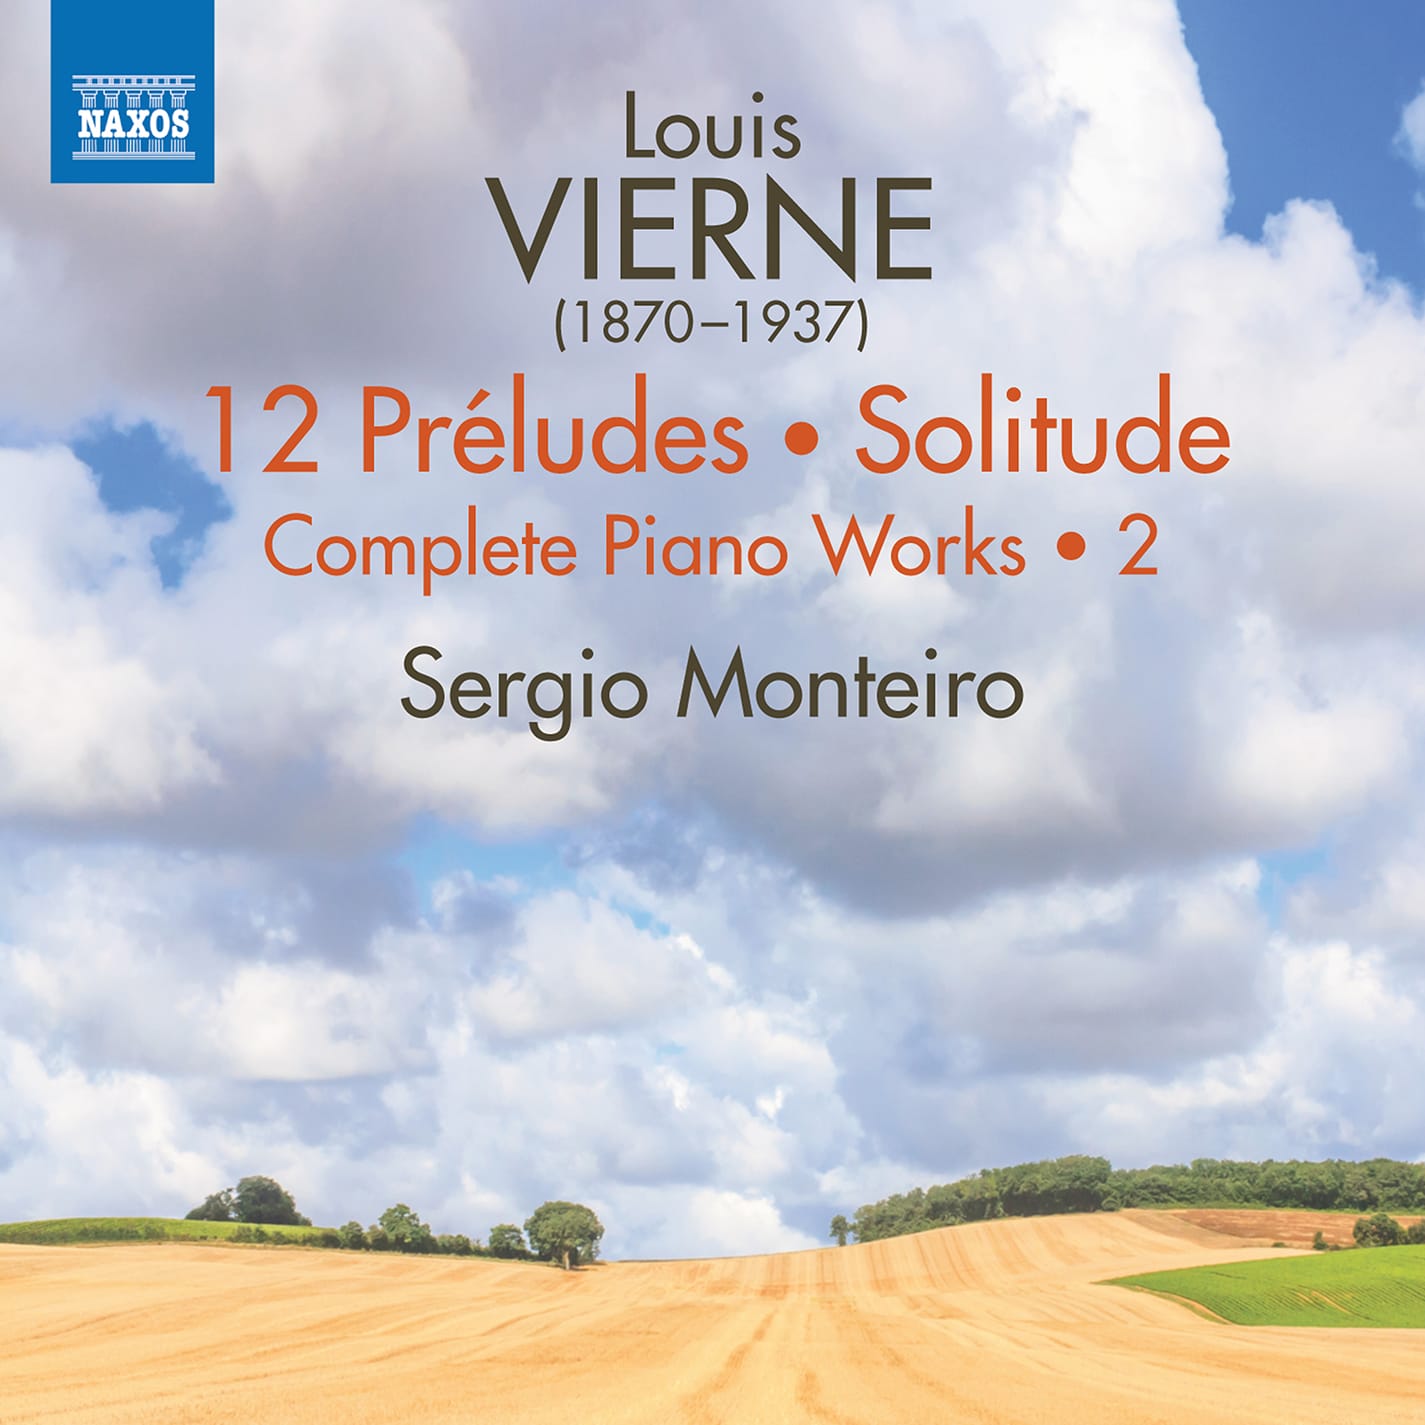 Louis Vierne's piano music: revelatory performances by Sergio Monteiro